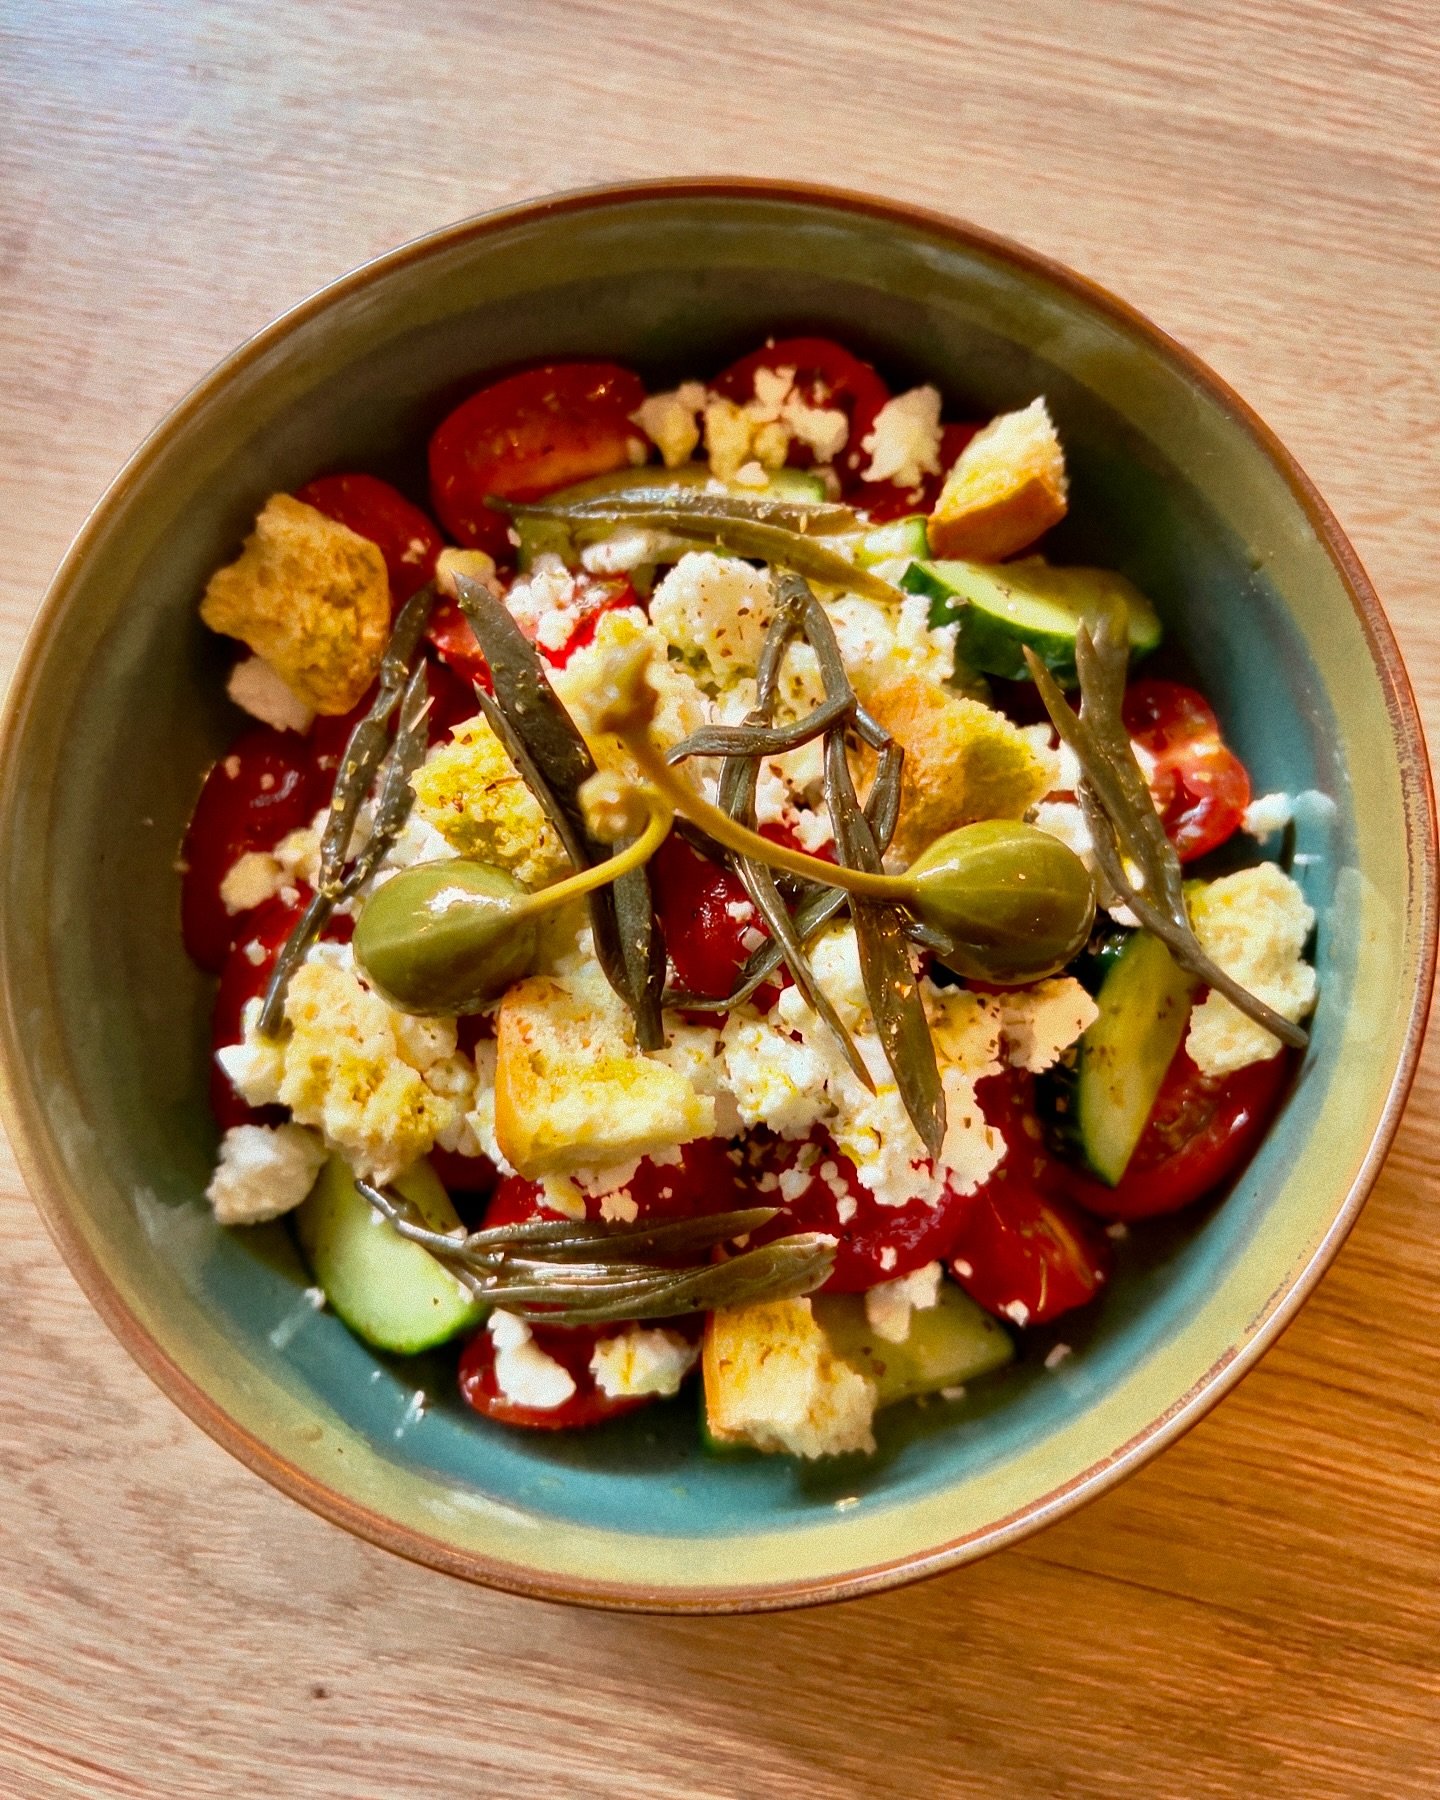 Mykonian Salade.
dakos uit Kreta | cherrytomaatjes | komkommer | kritamo | kapperappeltjes | oregano | feta 
#moderngreekfood #salade #feta #mykonian #mediterranean